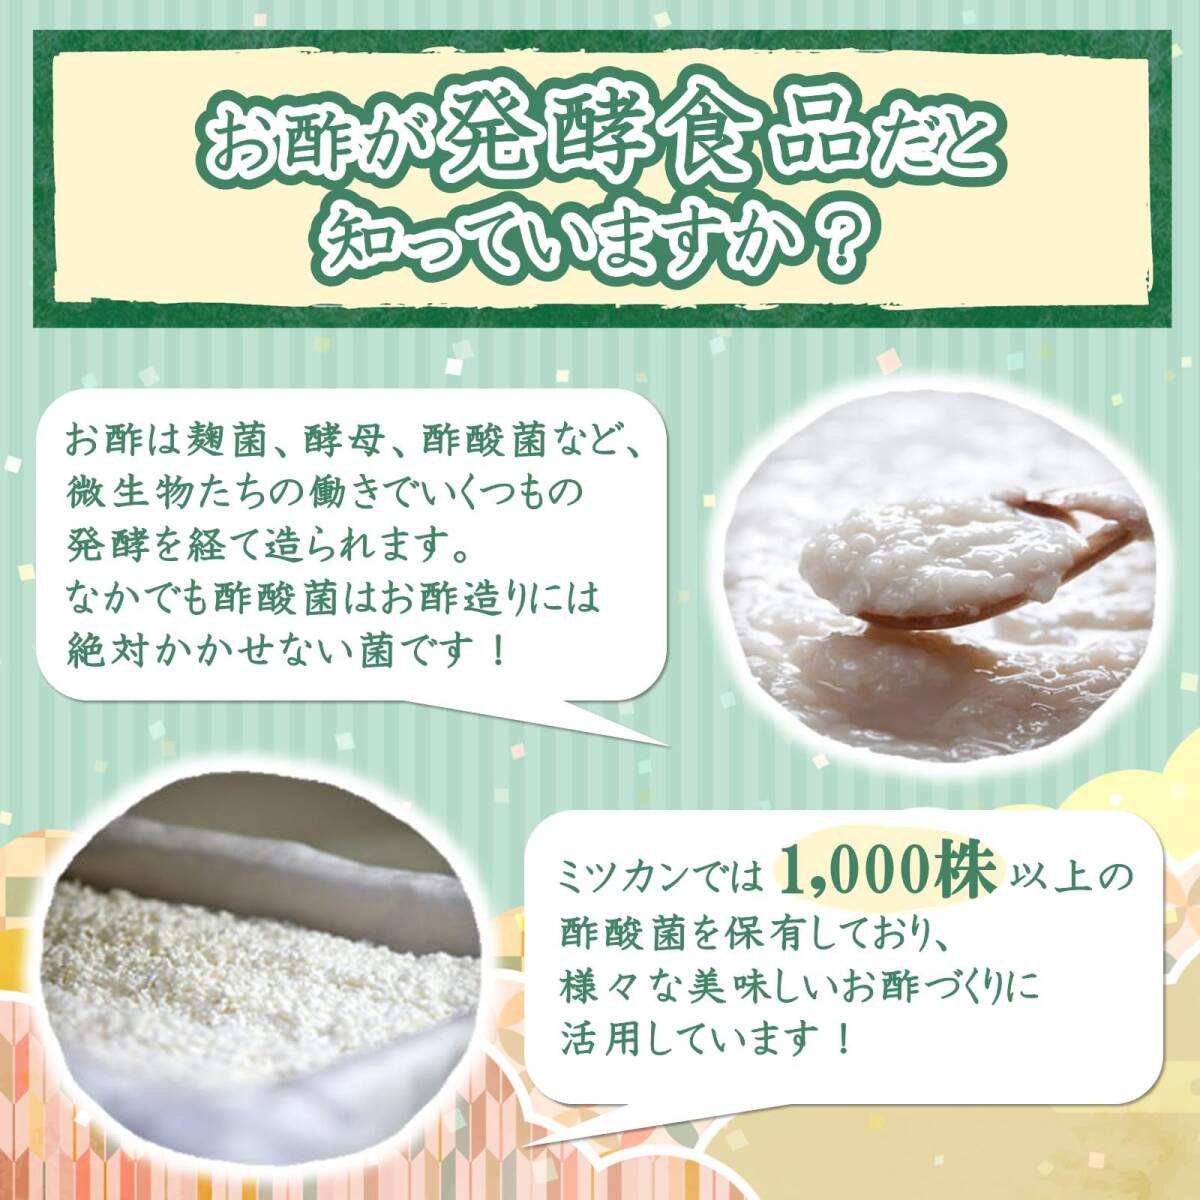 mitsu can рис уксус 500ml×20шт.